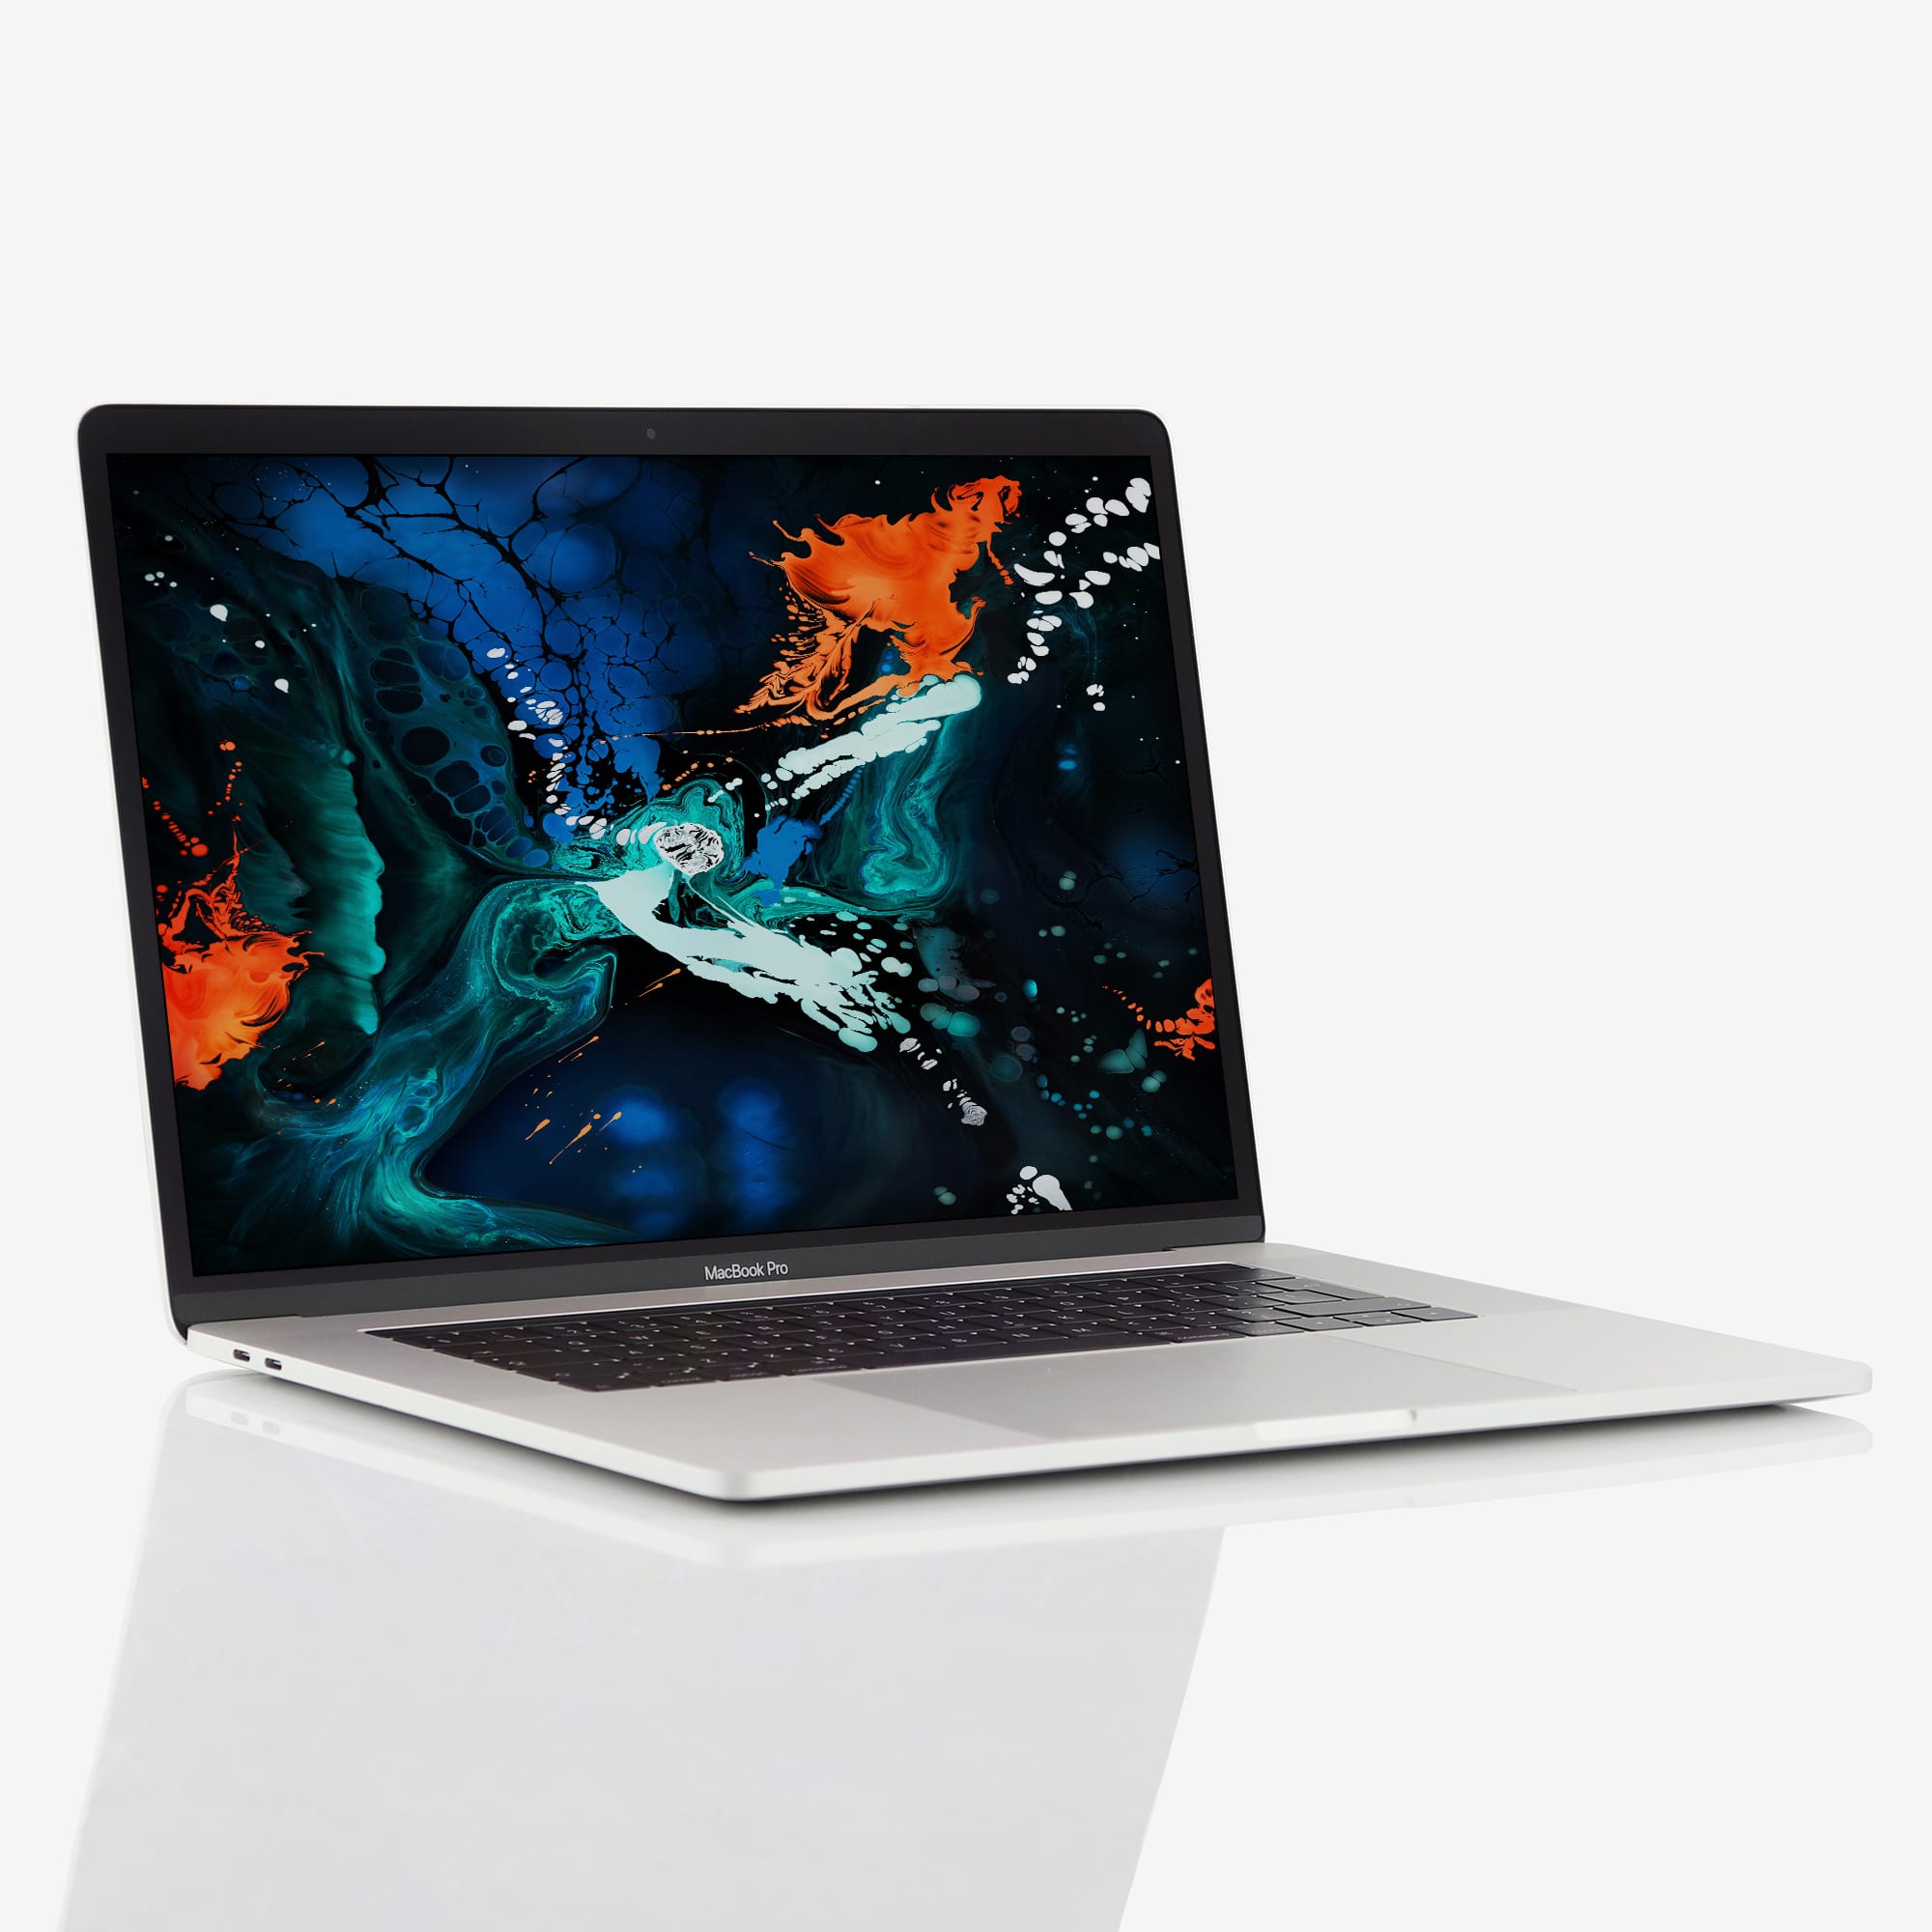 1 x Apple MacBook Pro Retina 15 Inch Intel Core i7 2.80 GHz (2017)